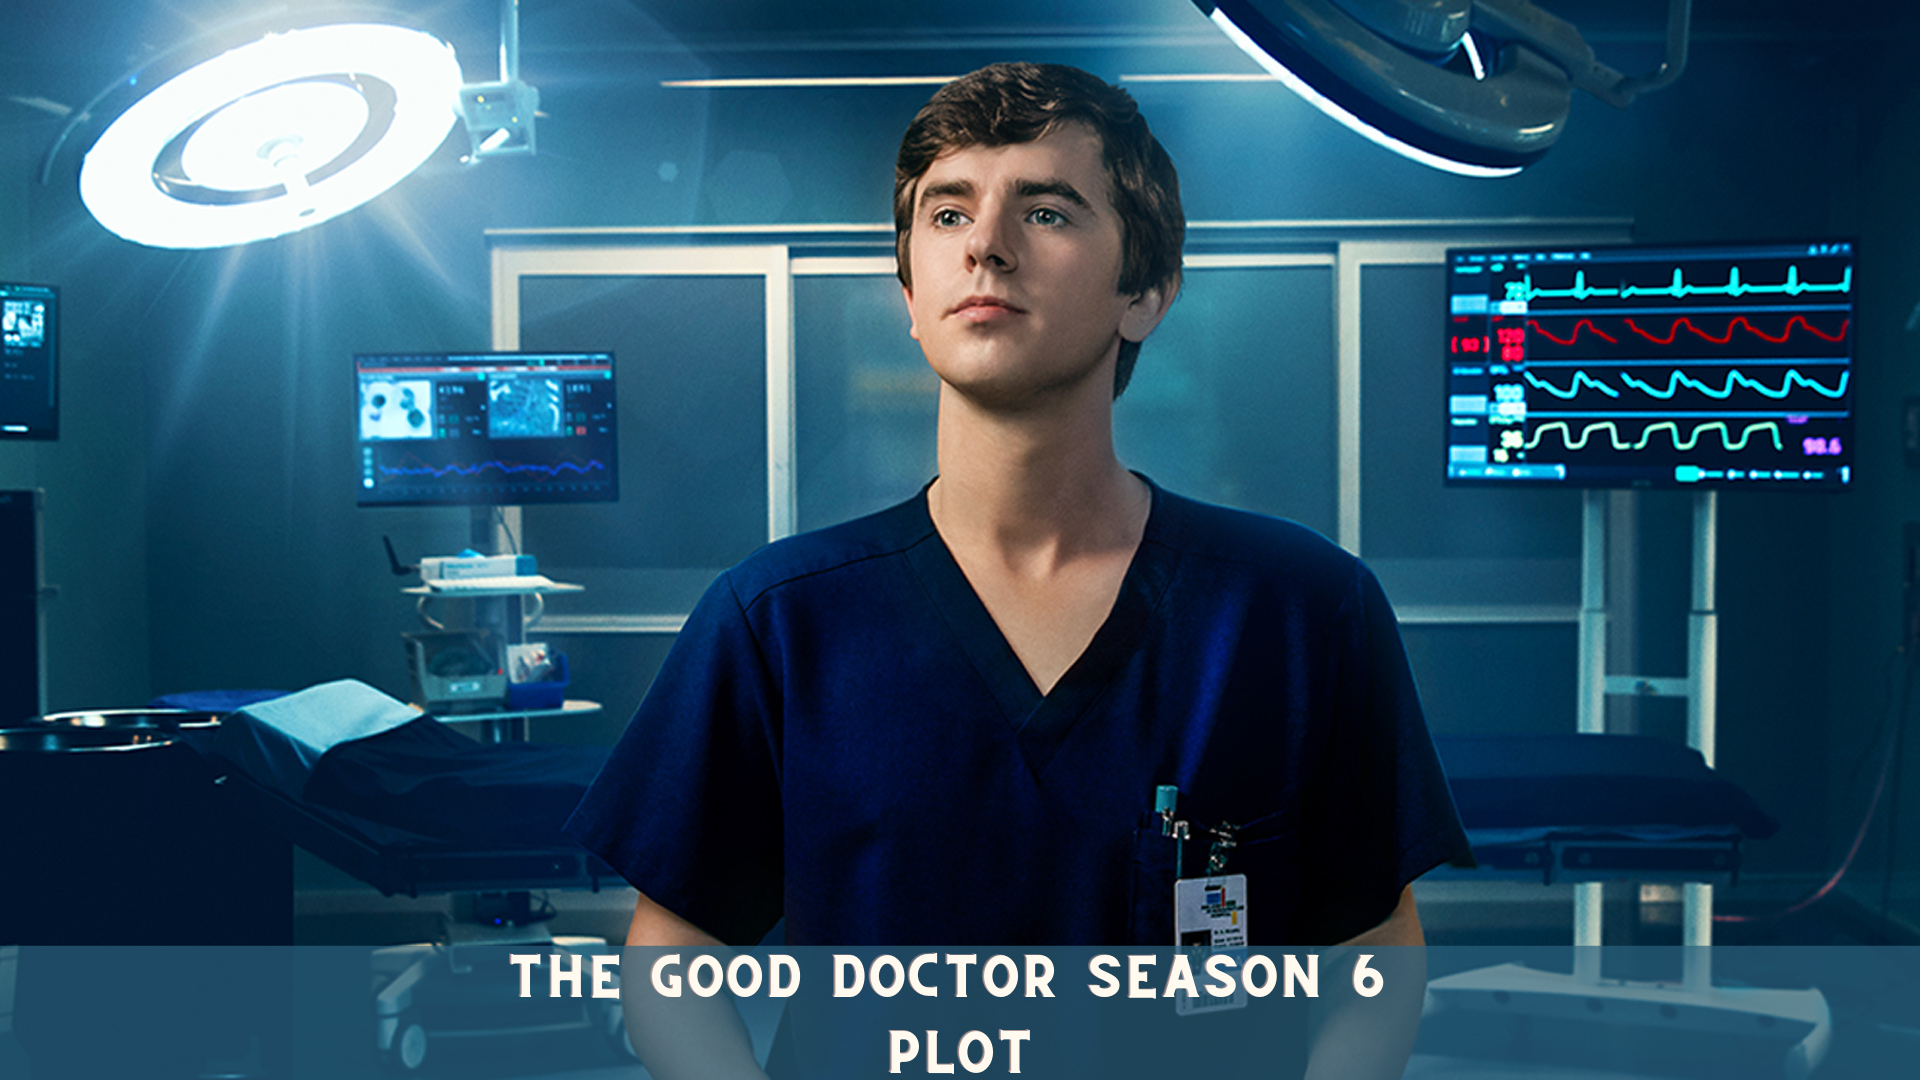 The Good Doctor Season 6 Plot